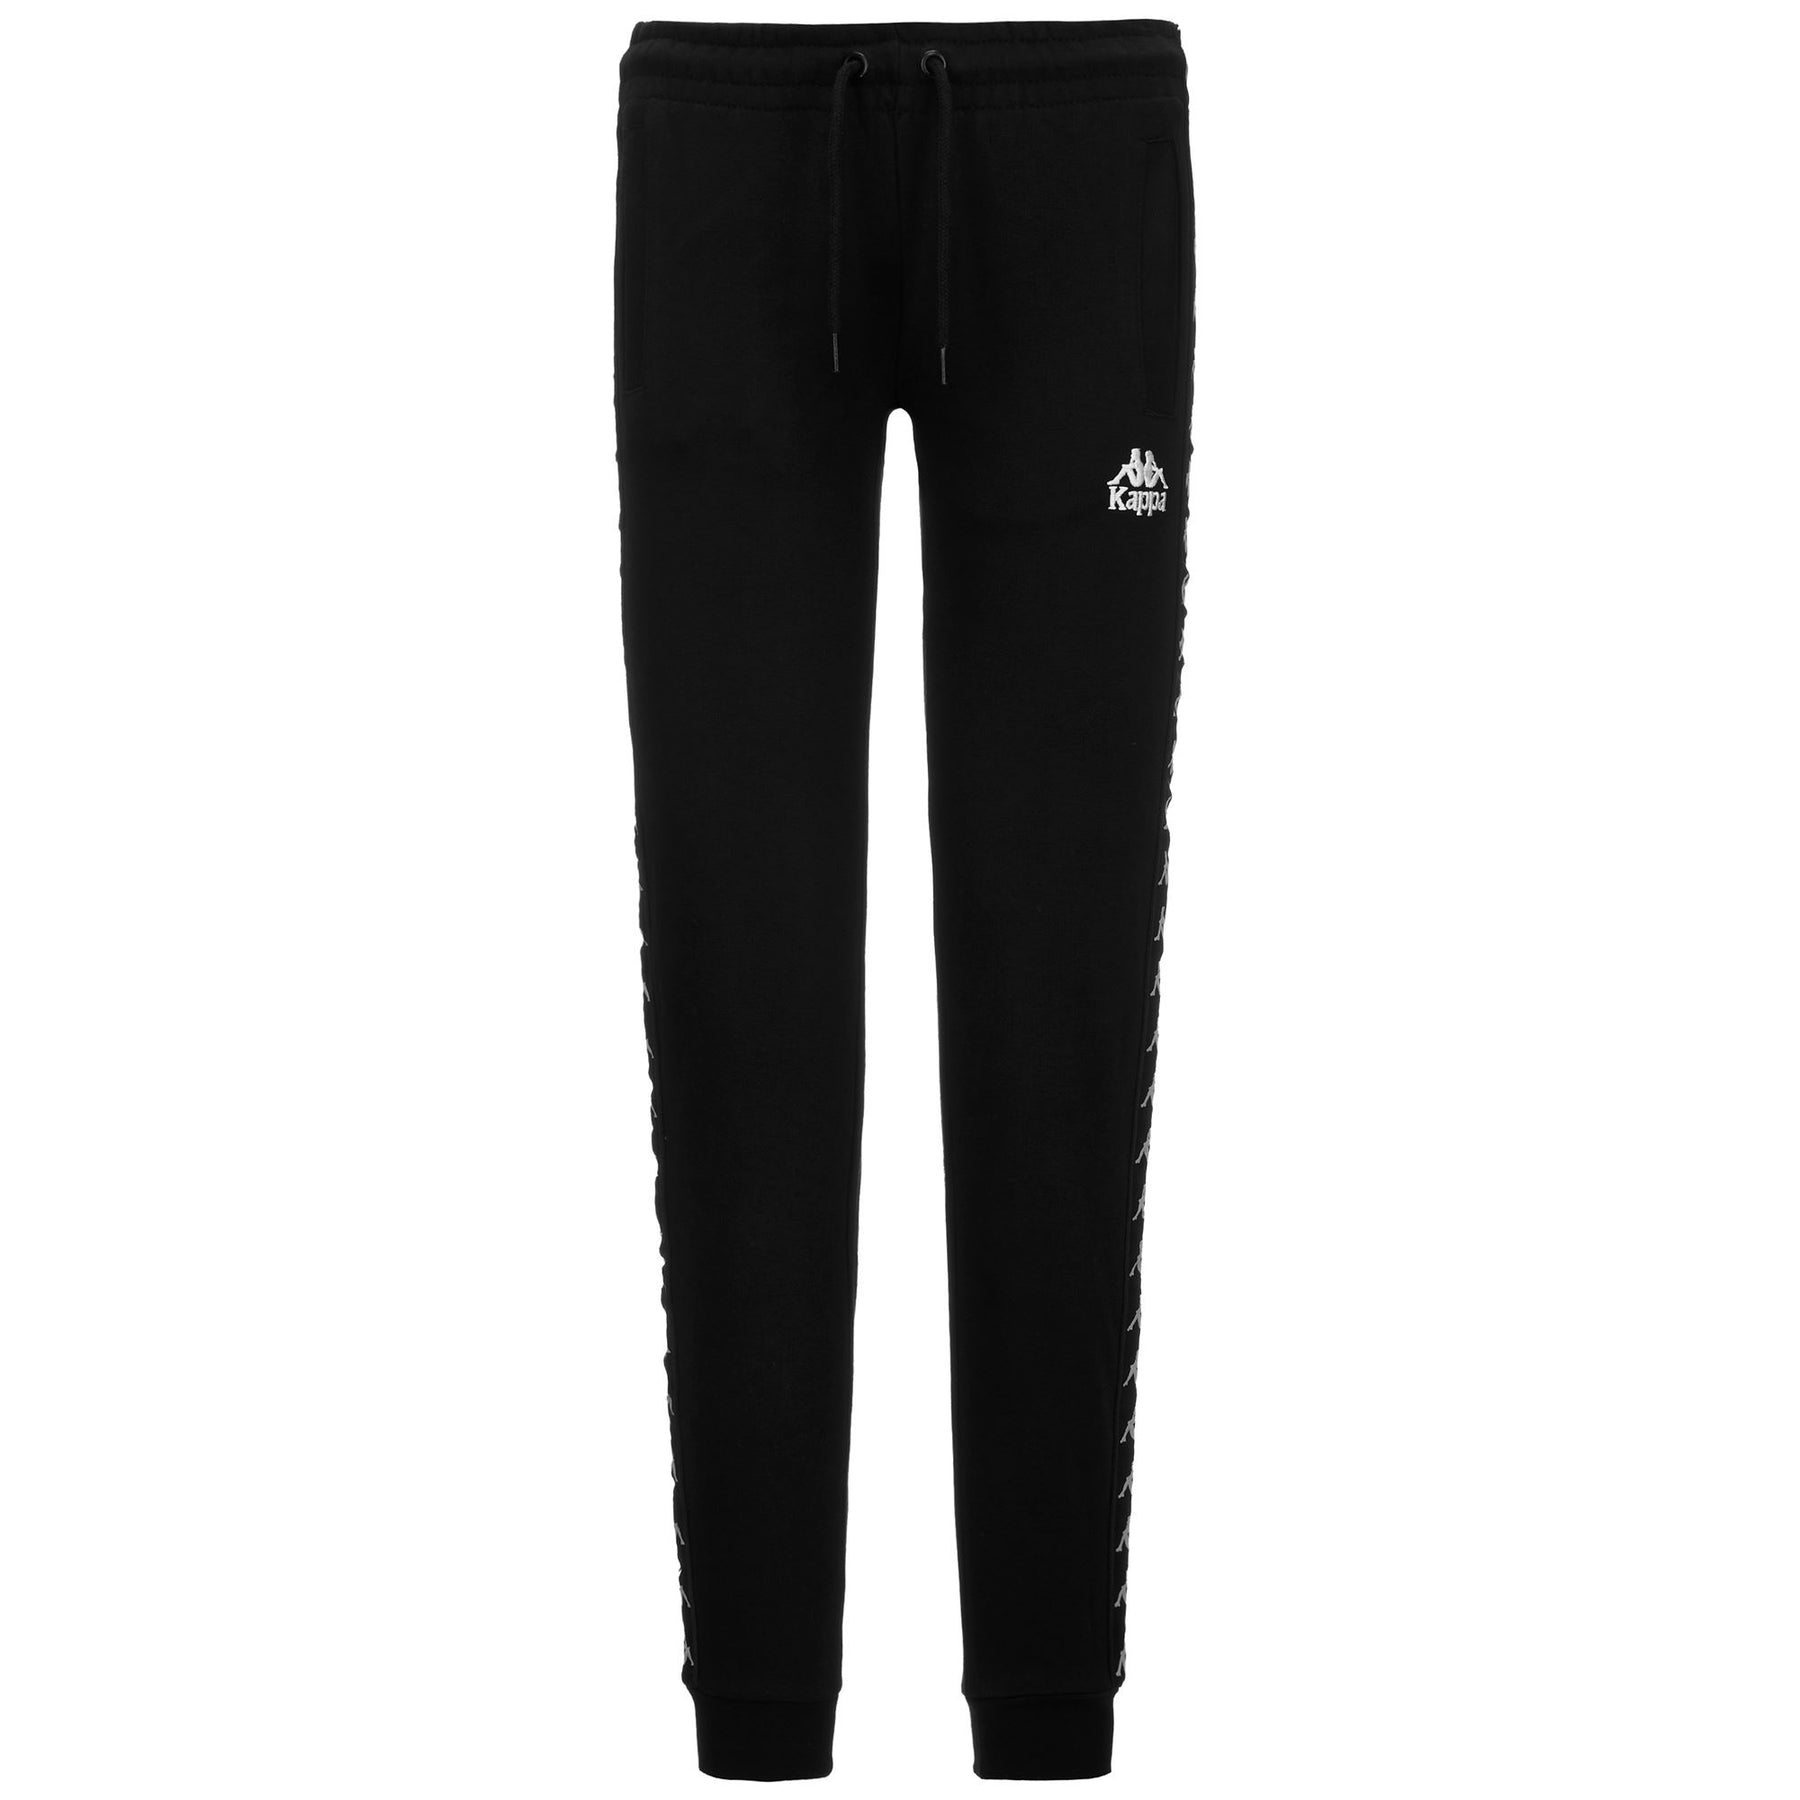 Pants Woman 222 BANDA BARNU 2 Sport Trousers BLACK-WHITE – Kappa.com